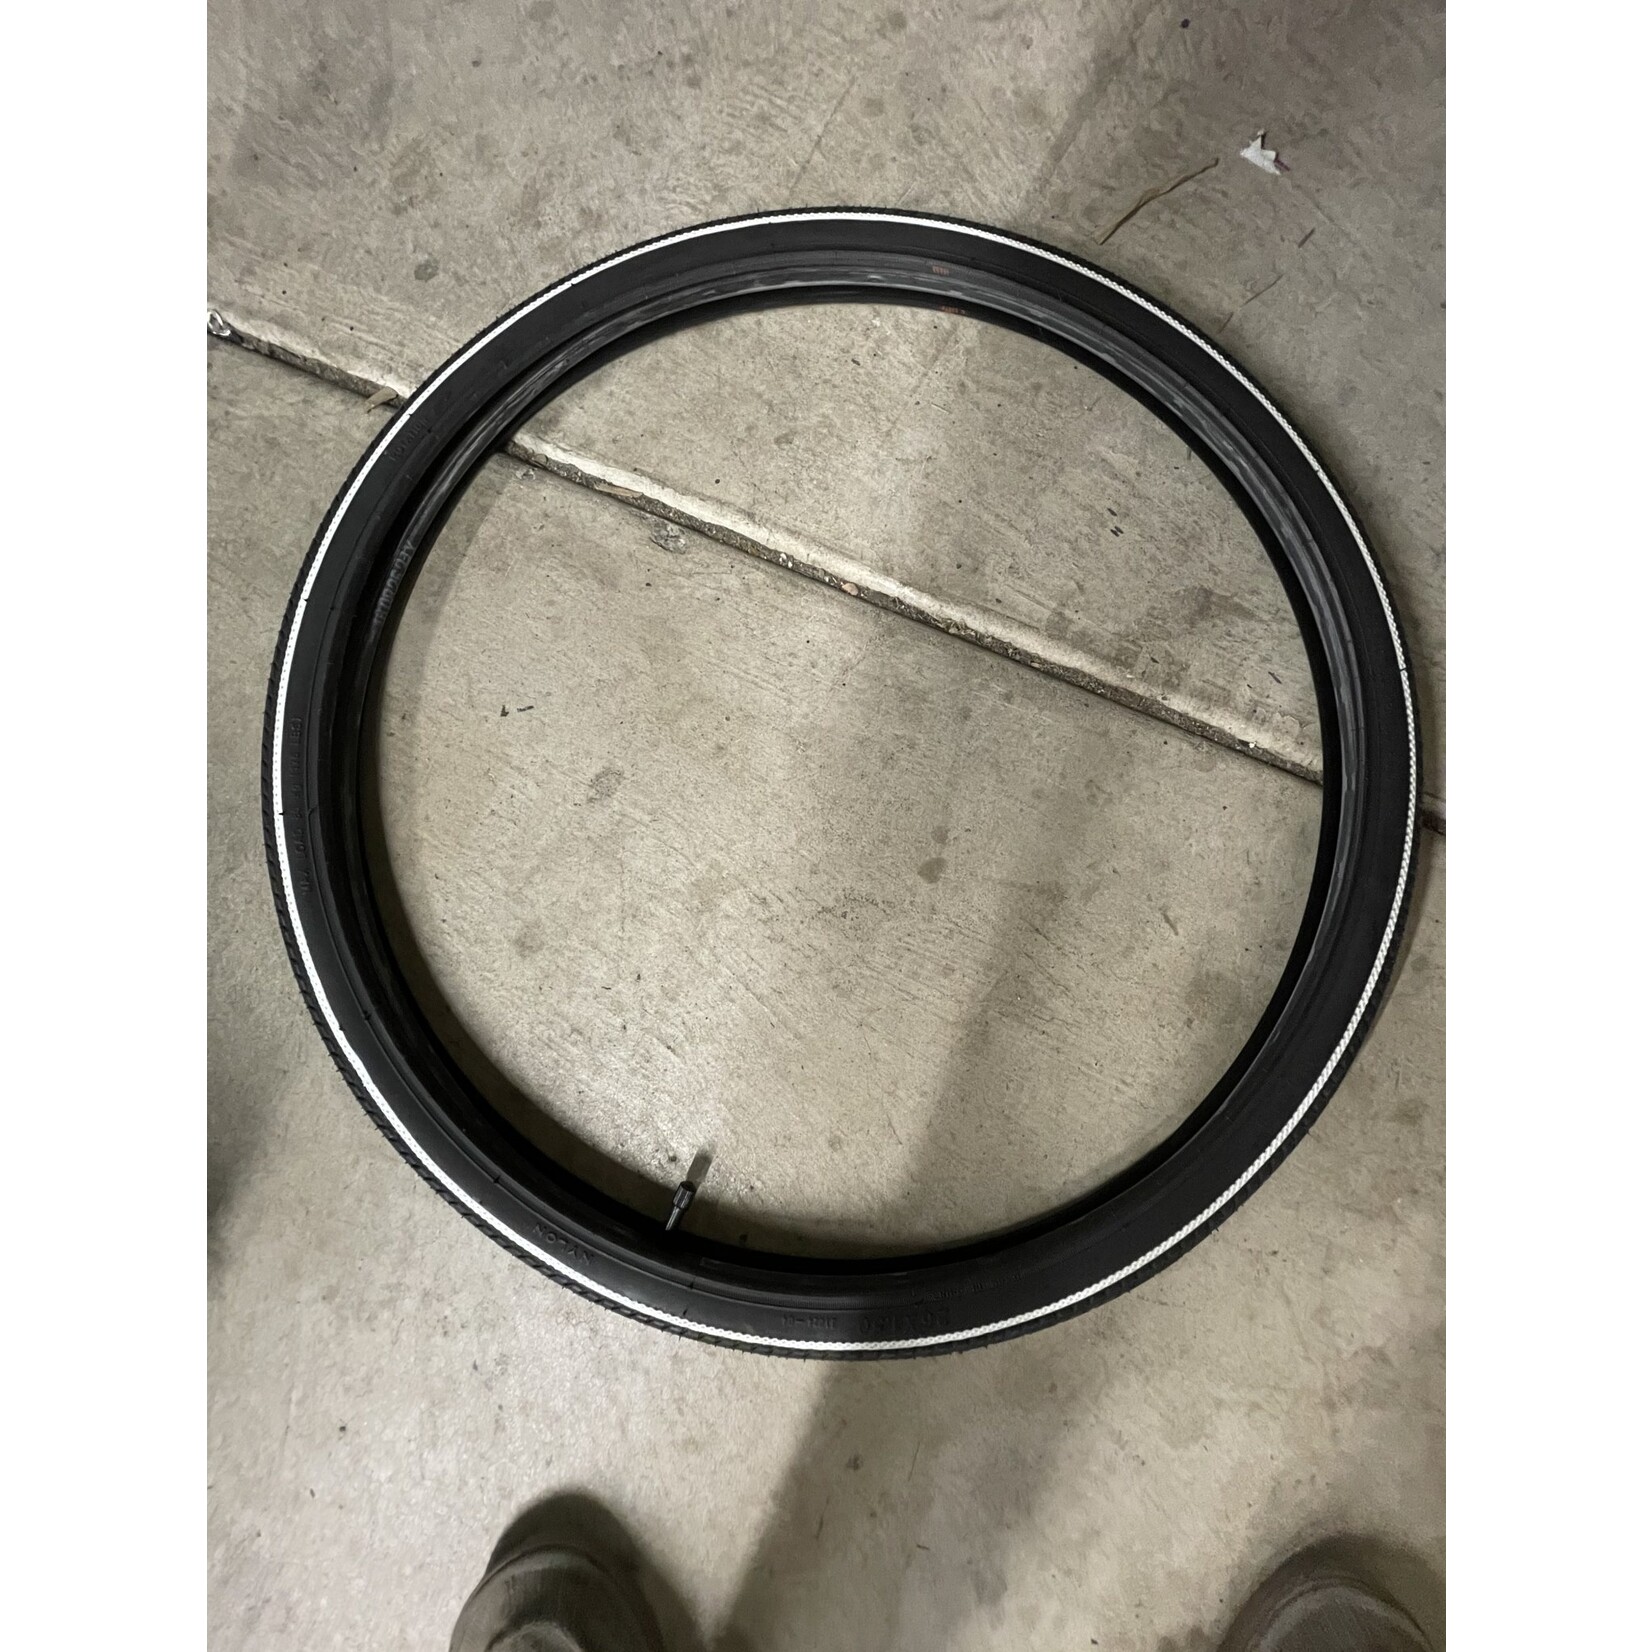 Bulk 700 X 40 Bicycle Tire & Tube (Black w/ White Pinstripe)